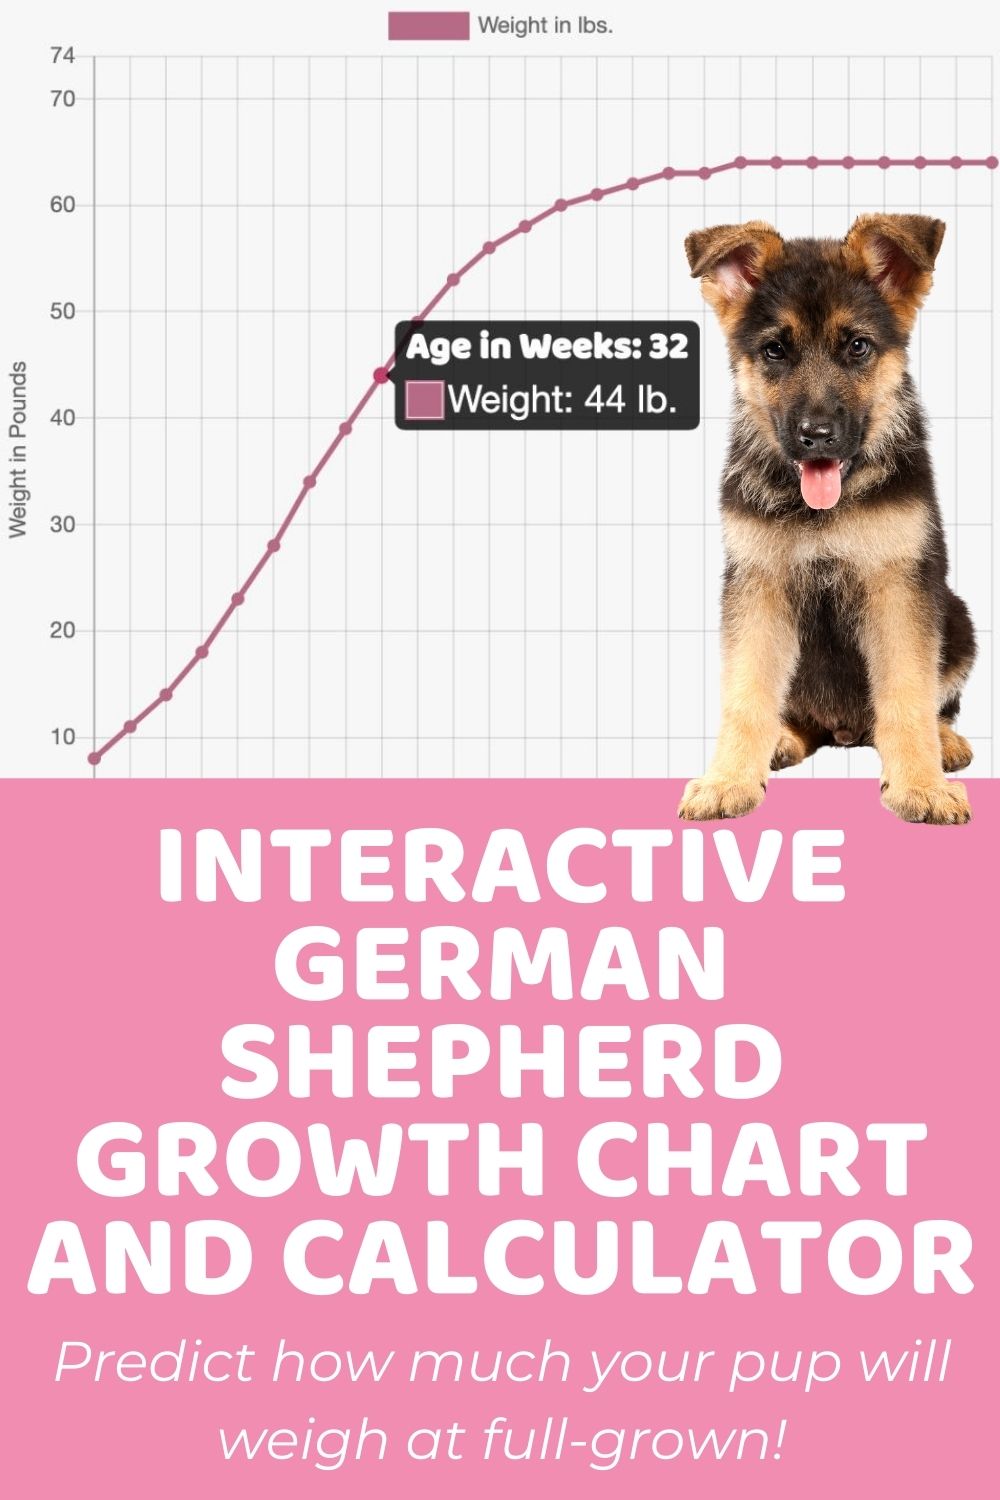 German Shepherd Growth Chart Pictures